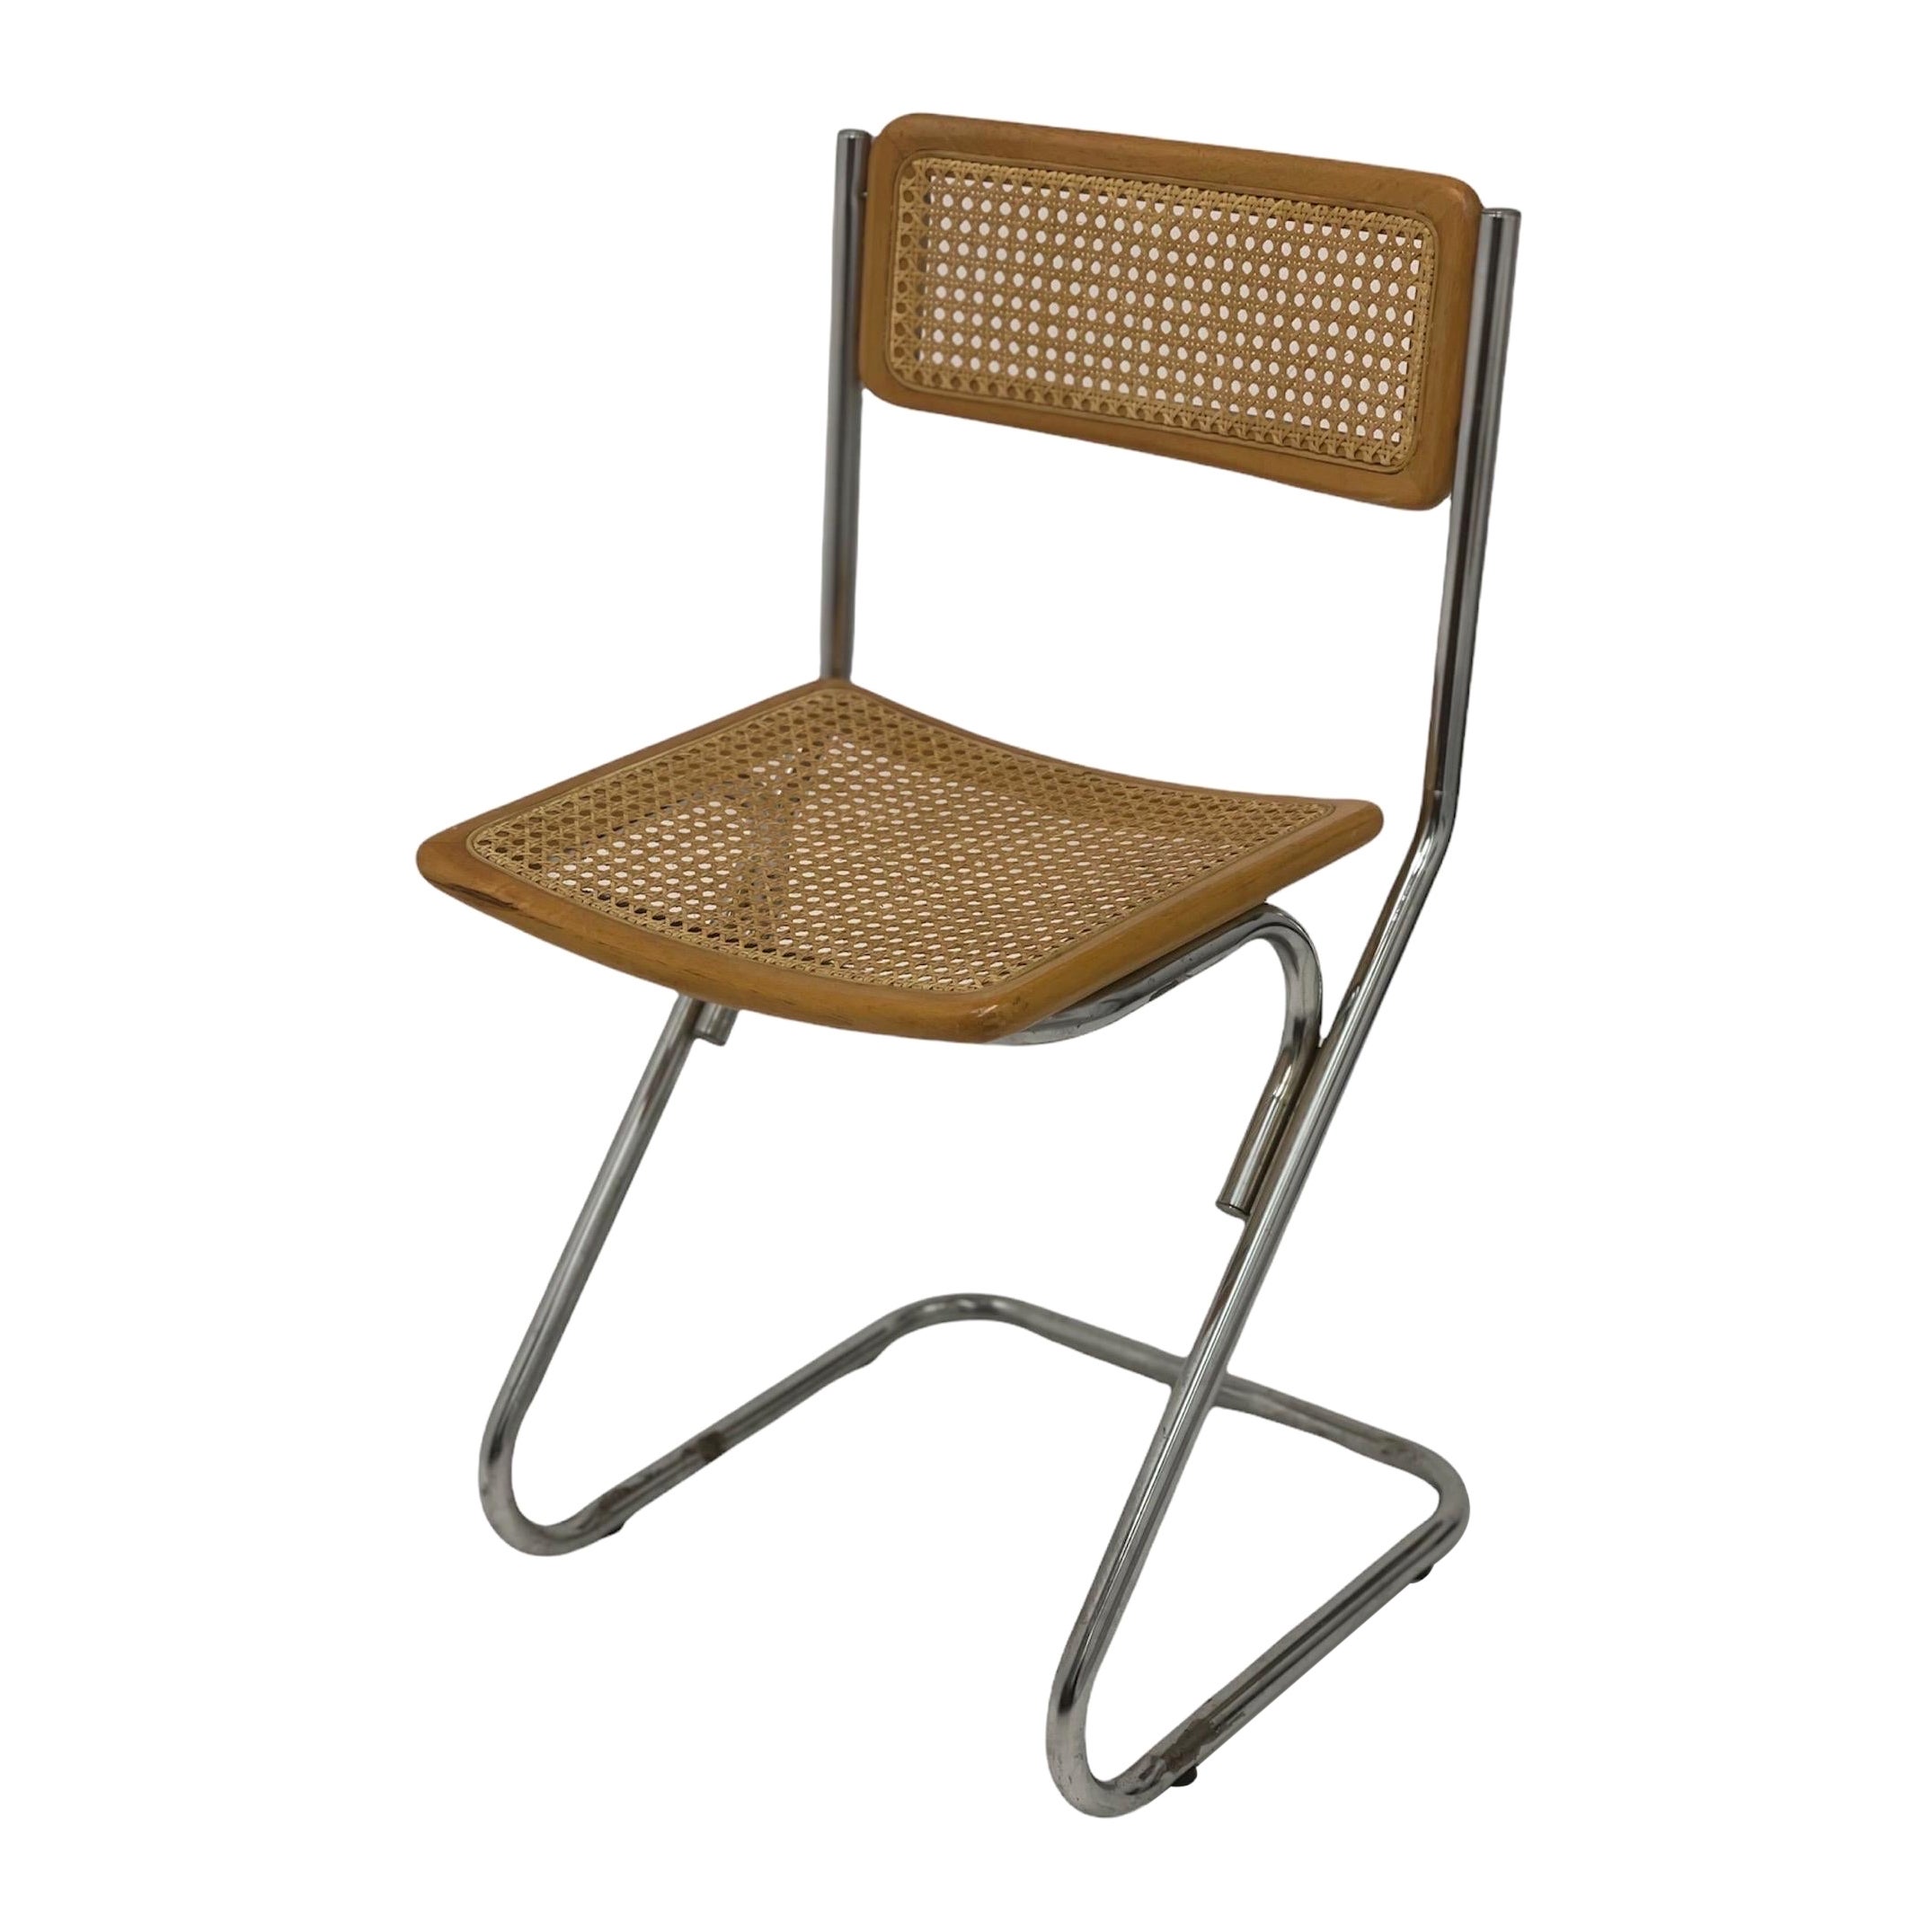 Vintage Cane Metal Chair .